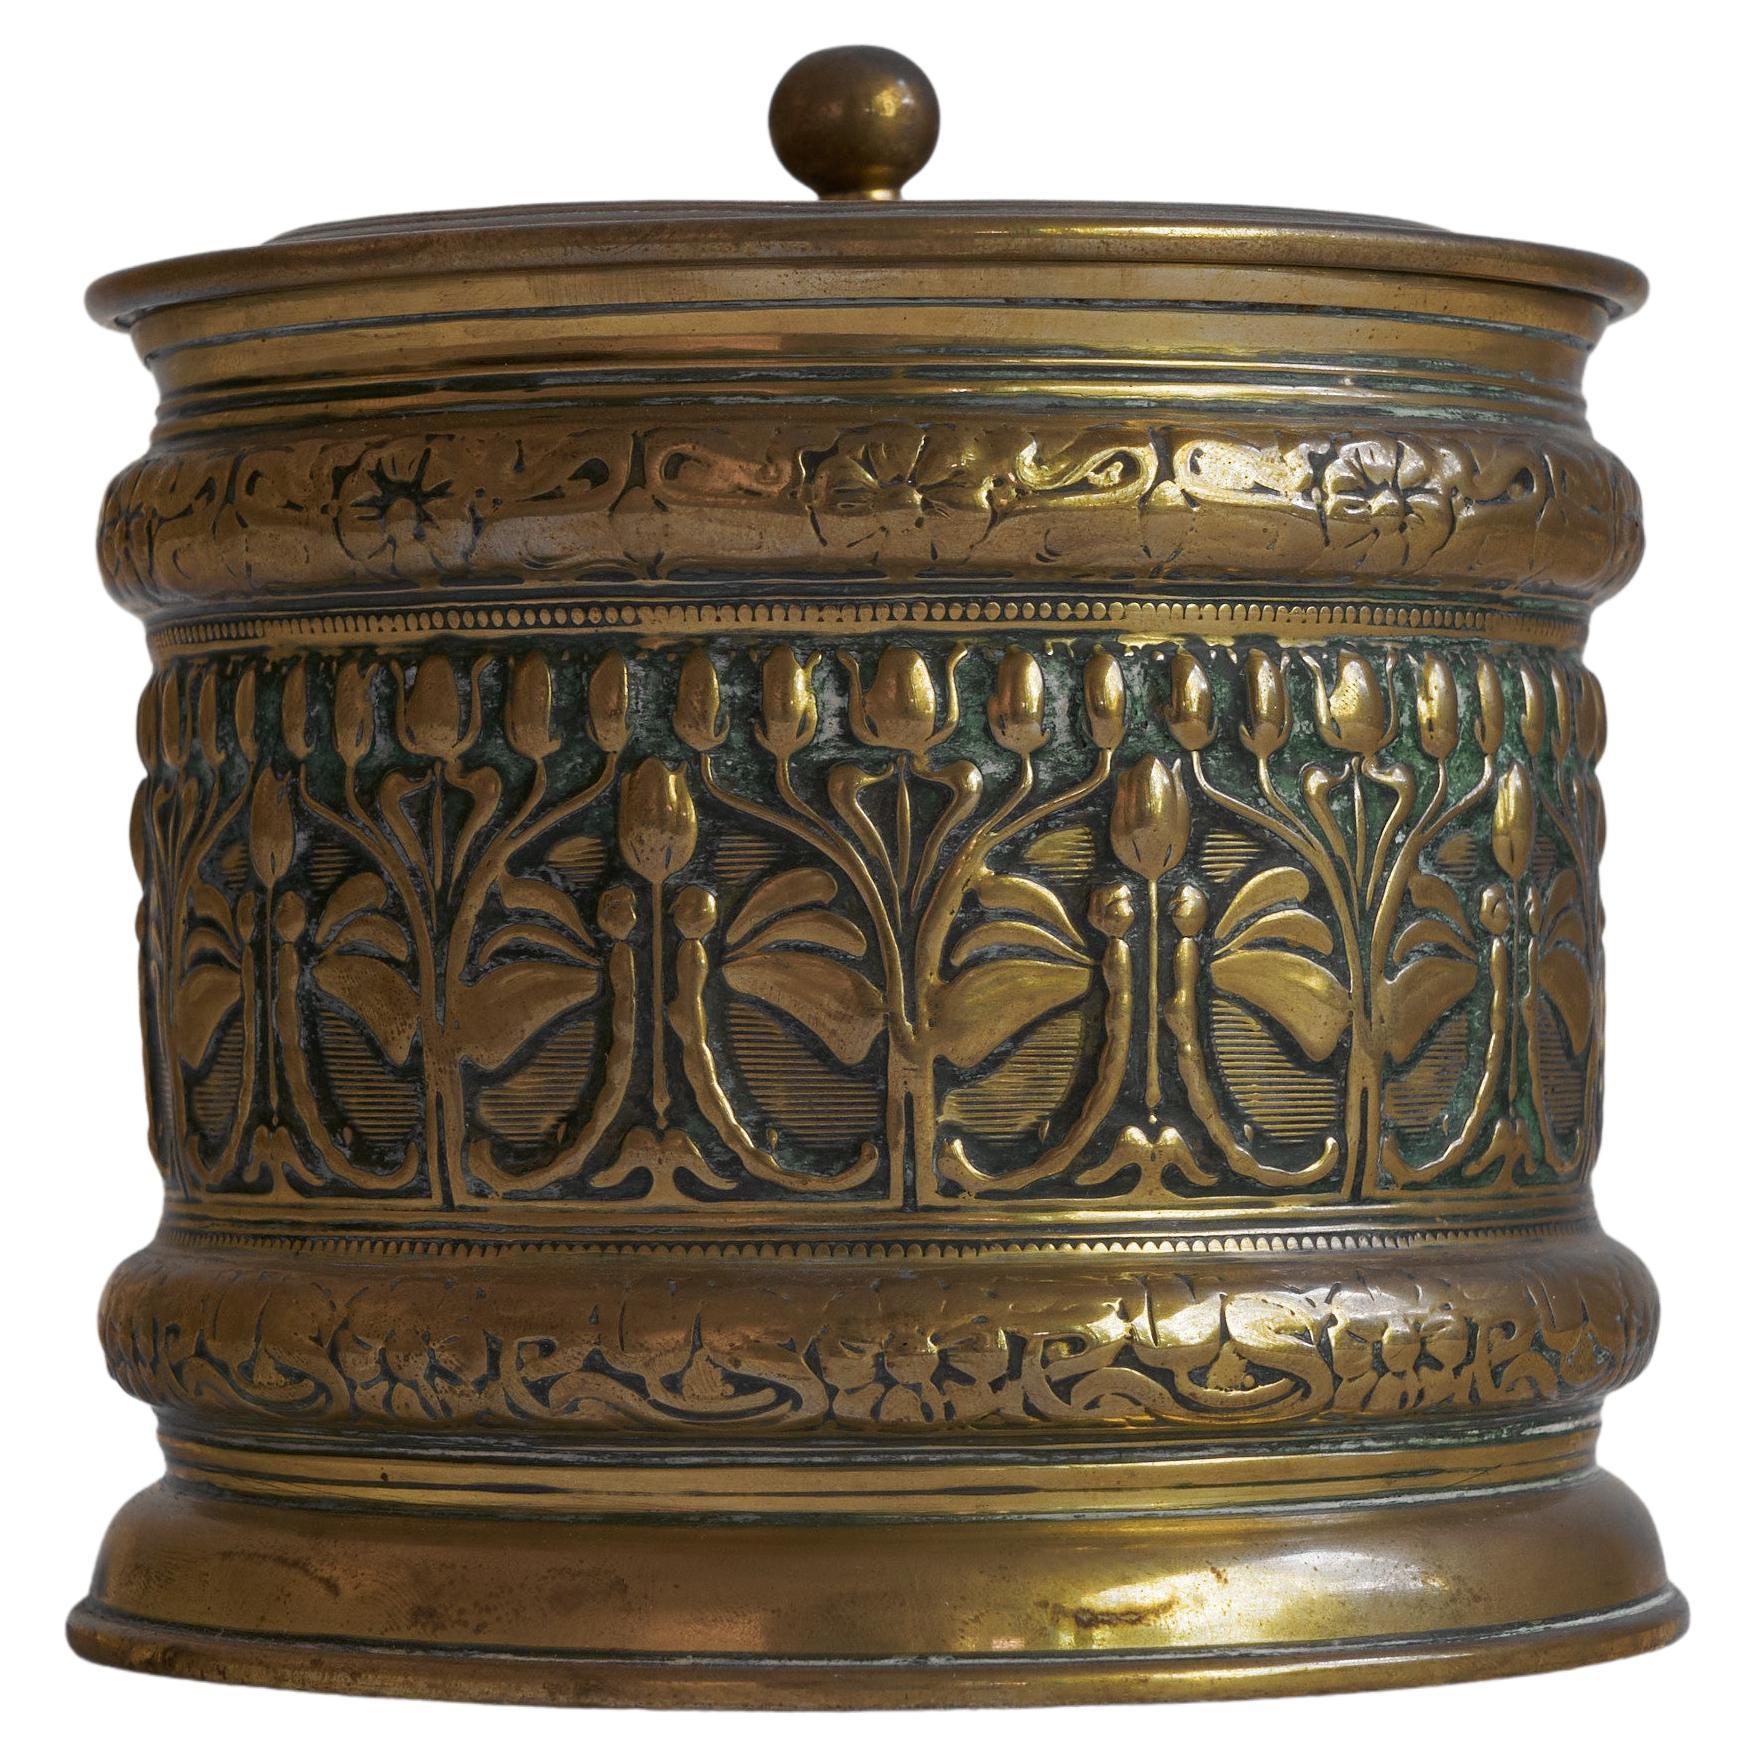 Erhard & Söhne Art Nouveau Lidded Pot in Patinated Brass